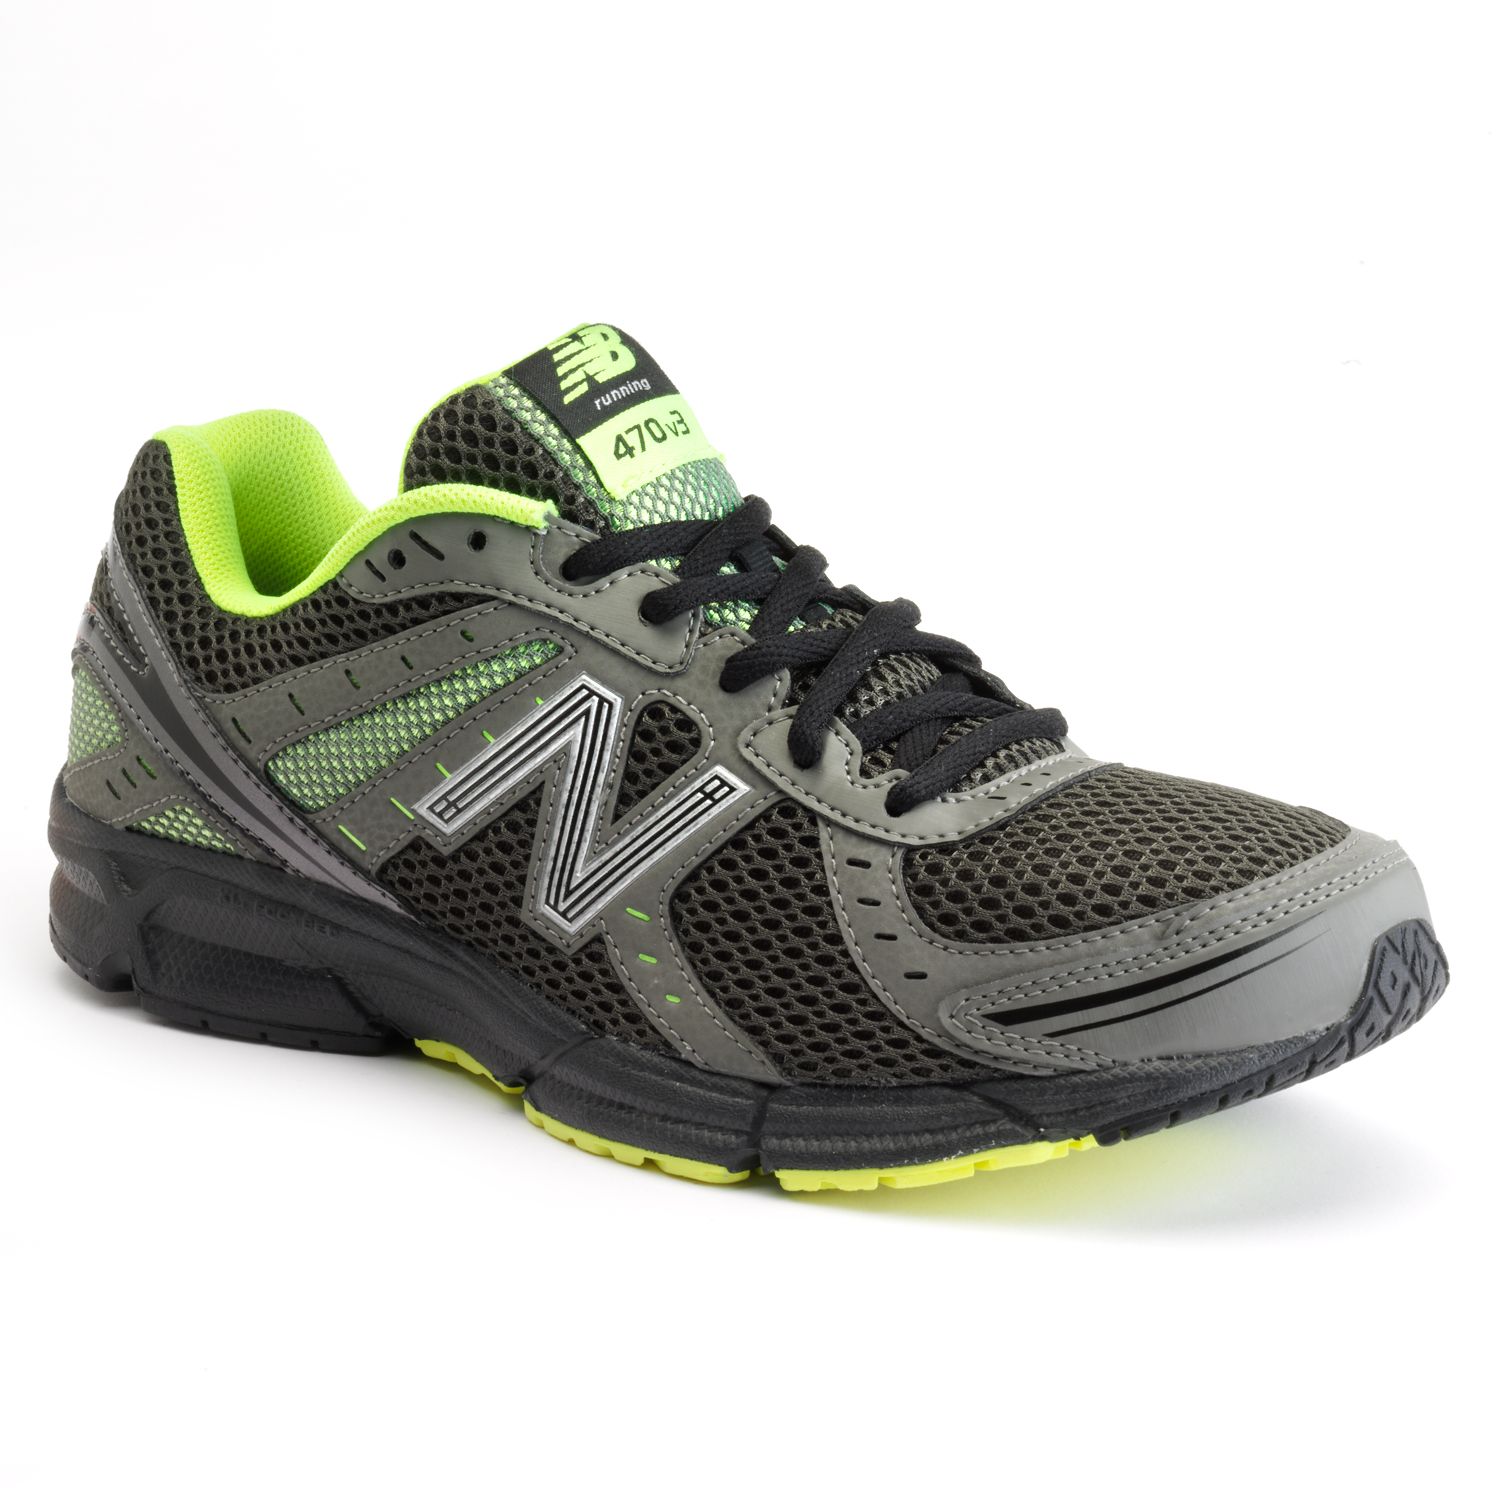 New Balance 470v3 Running Shoes - Men